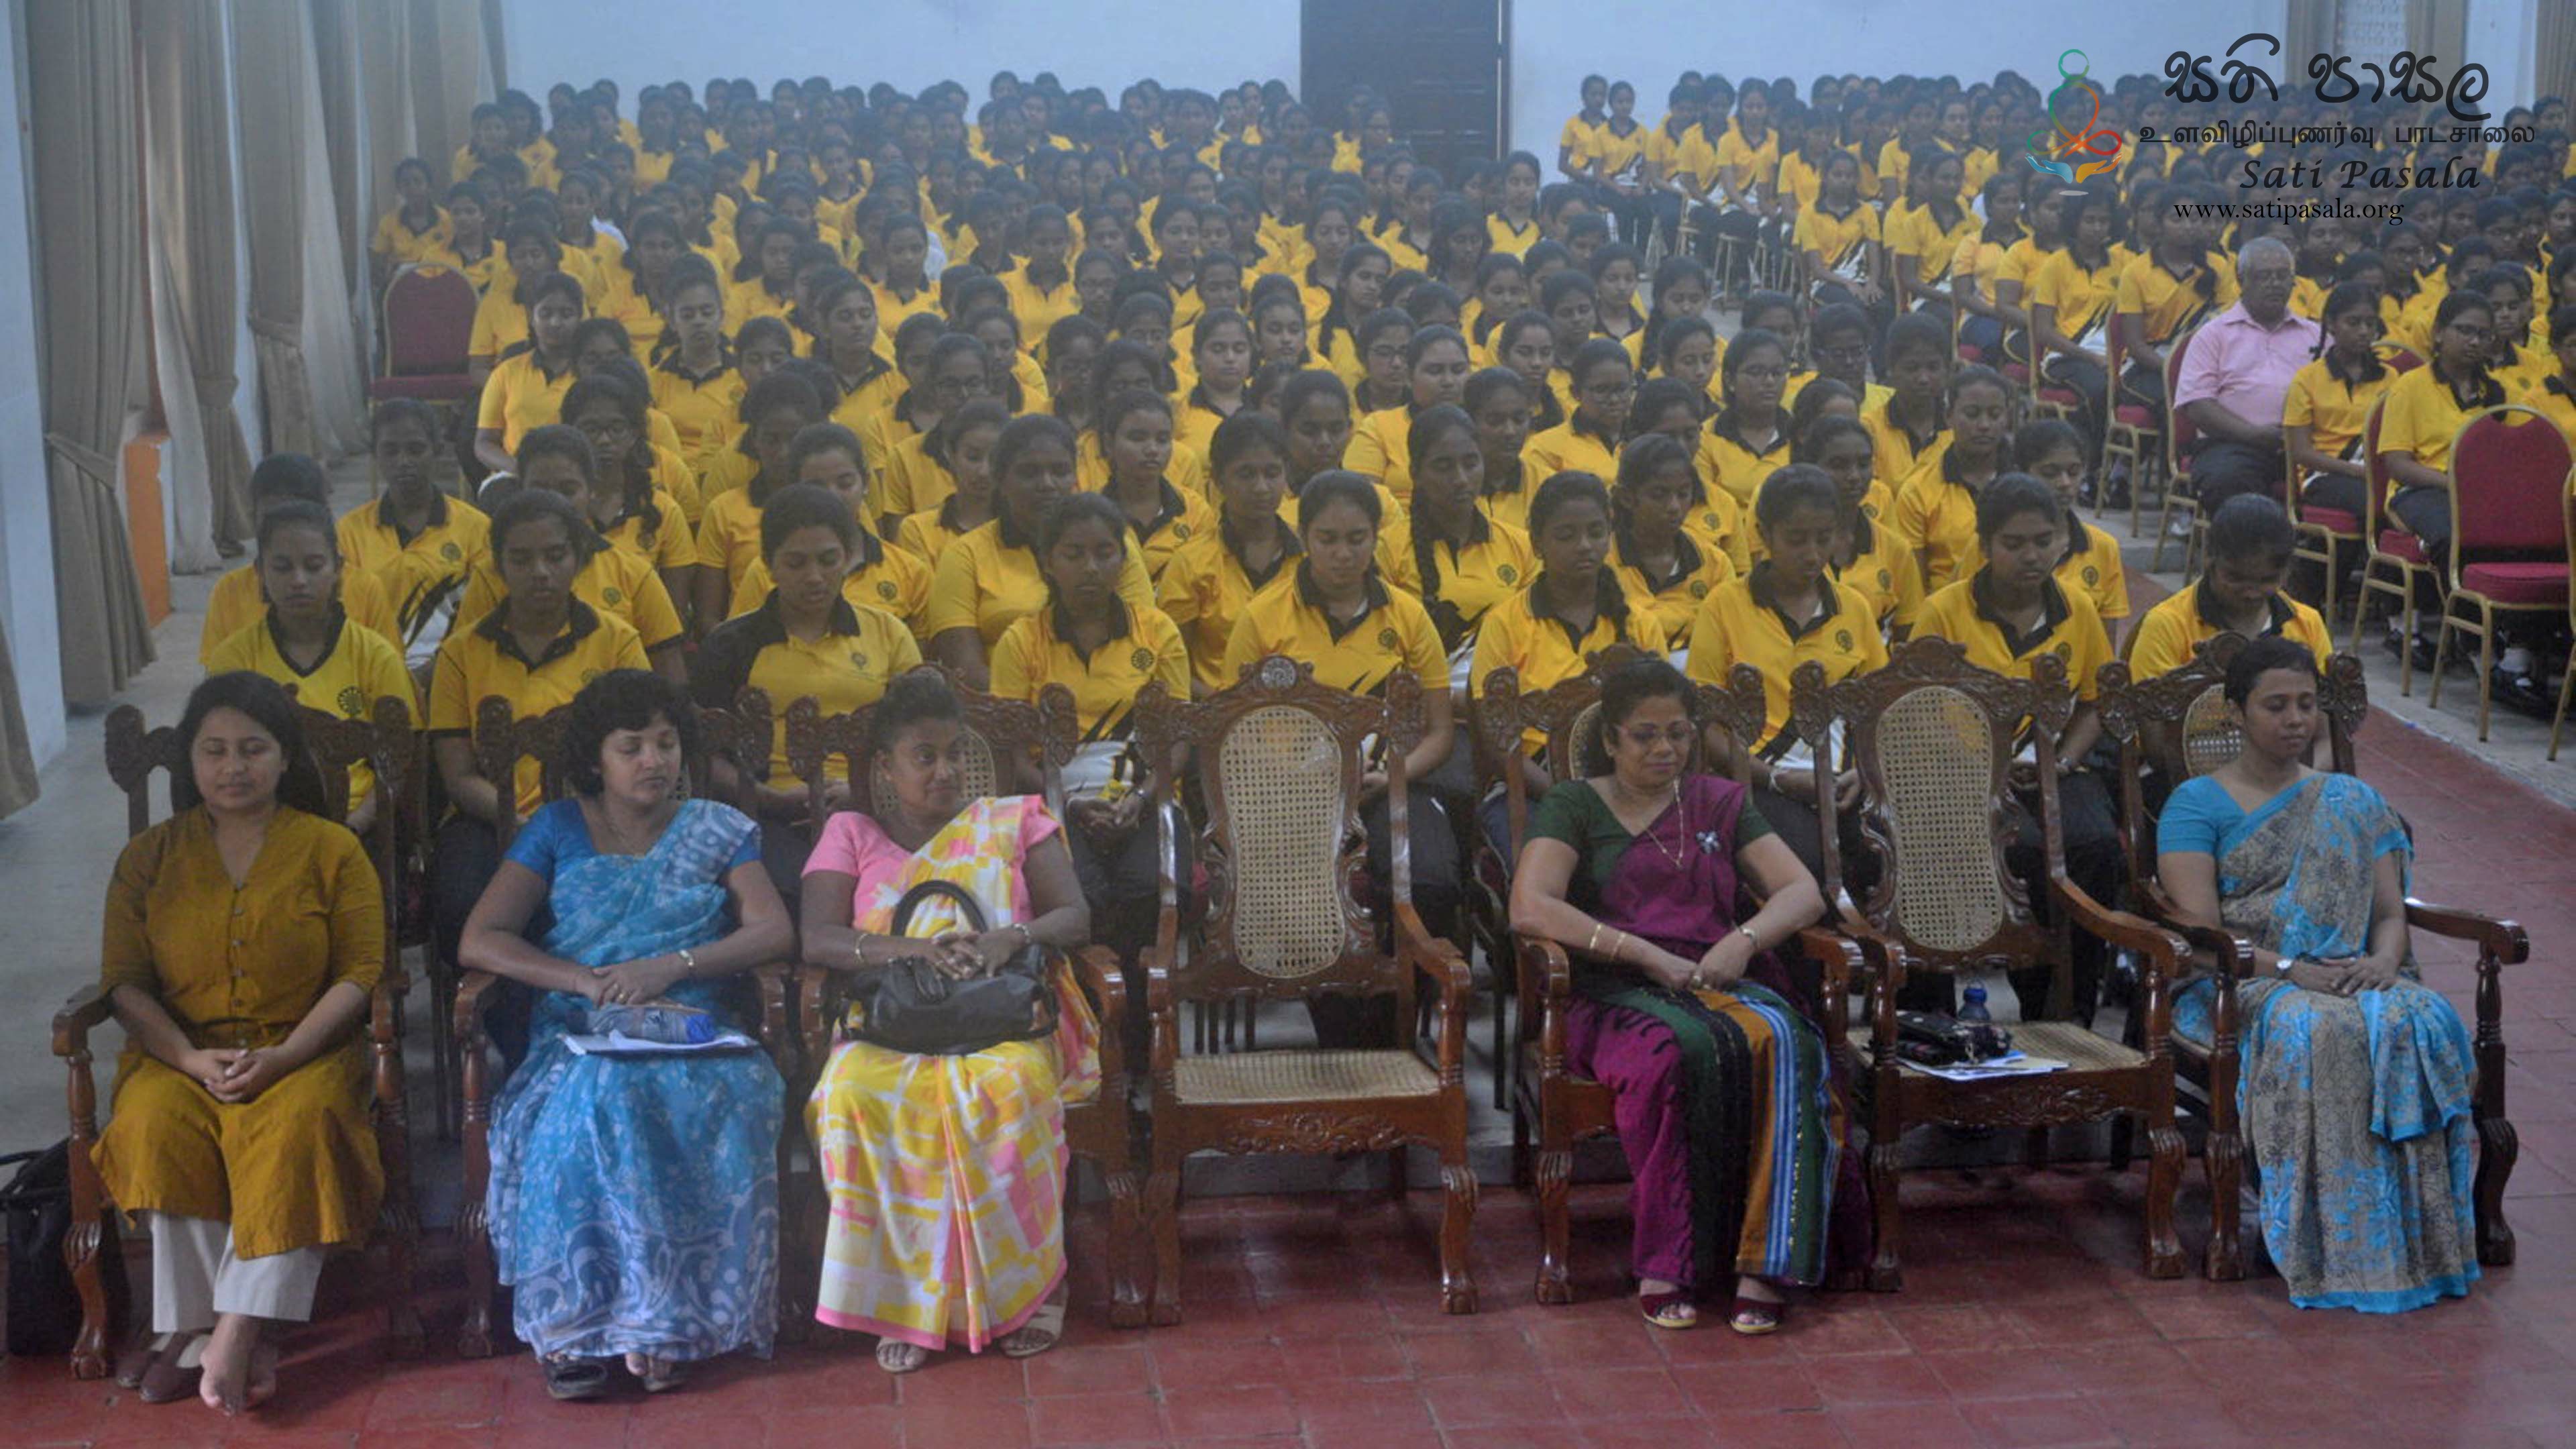 Sati Pasala Mindfulness Program at Anula Vidyalaya, Nugegoda